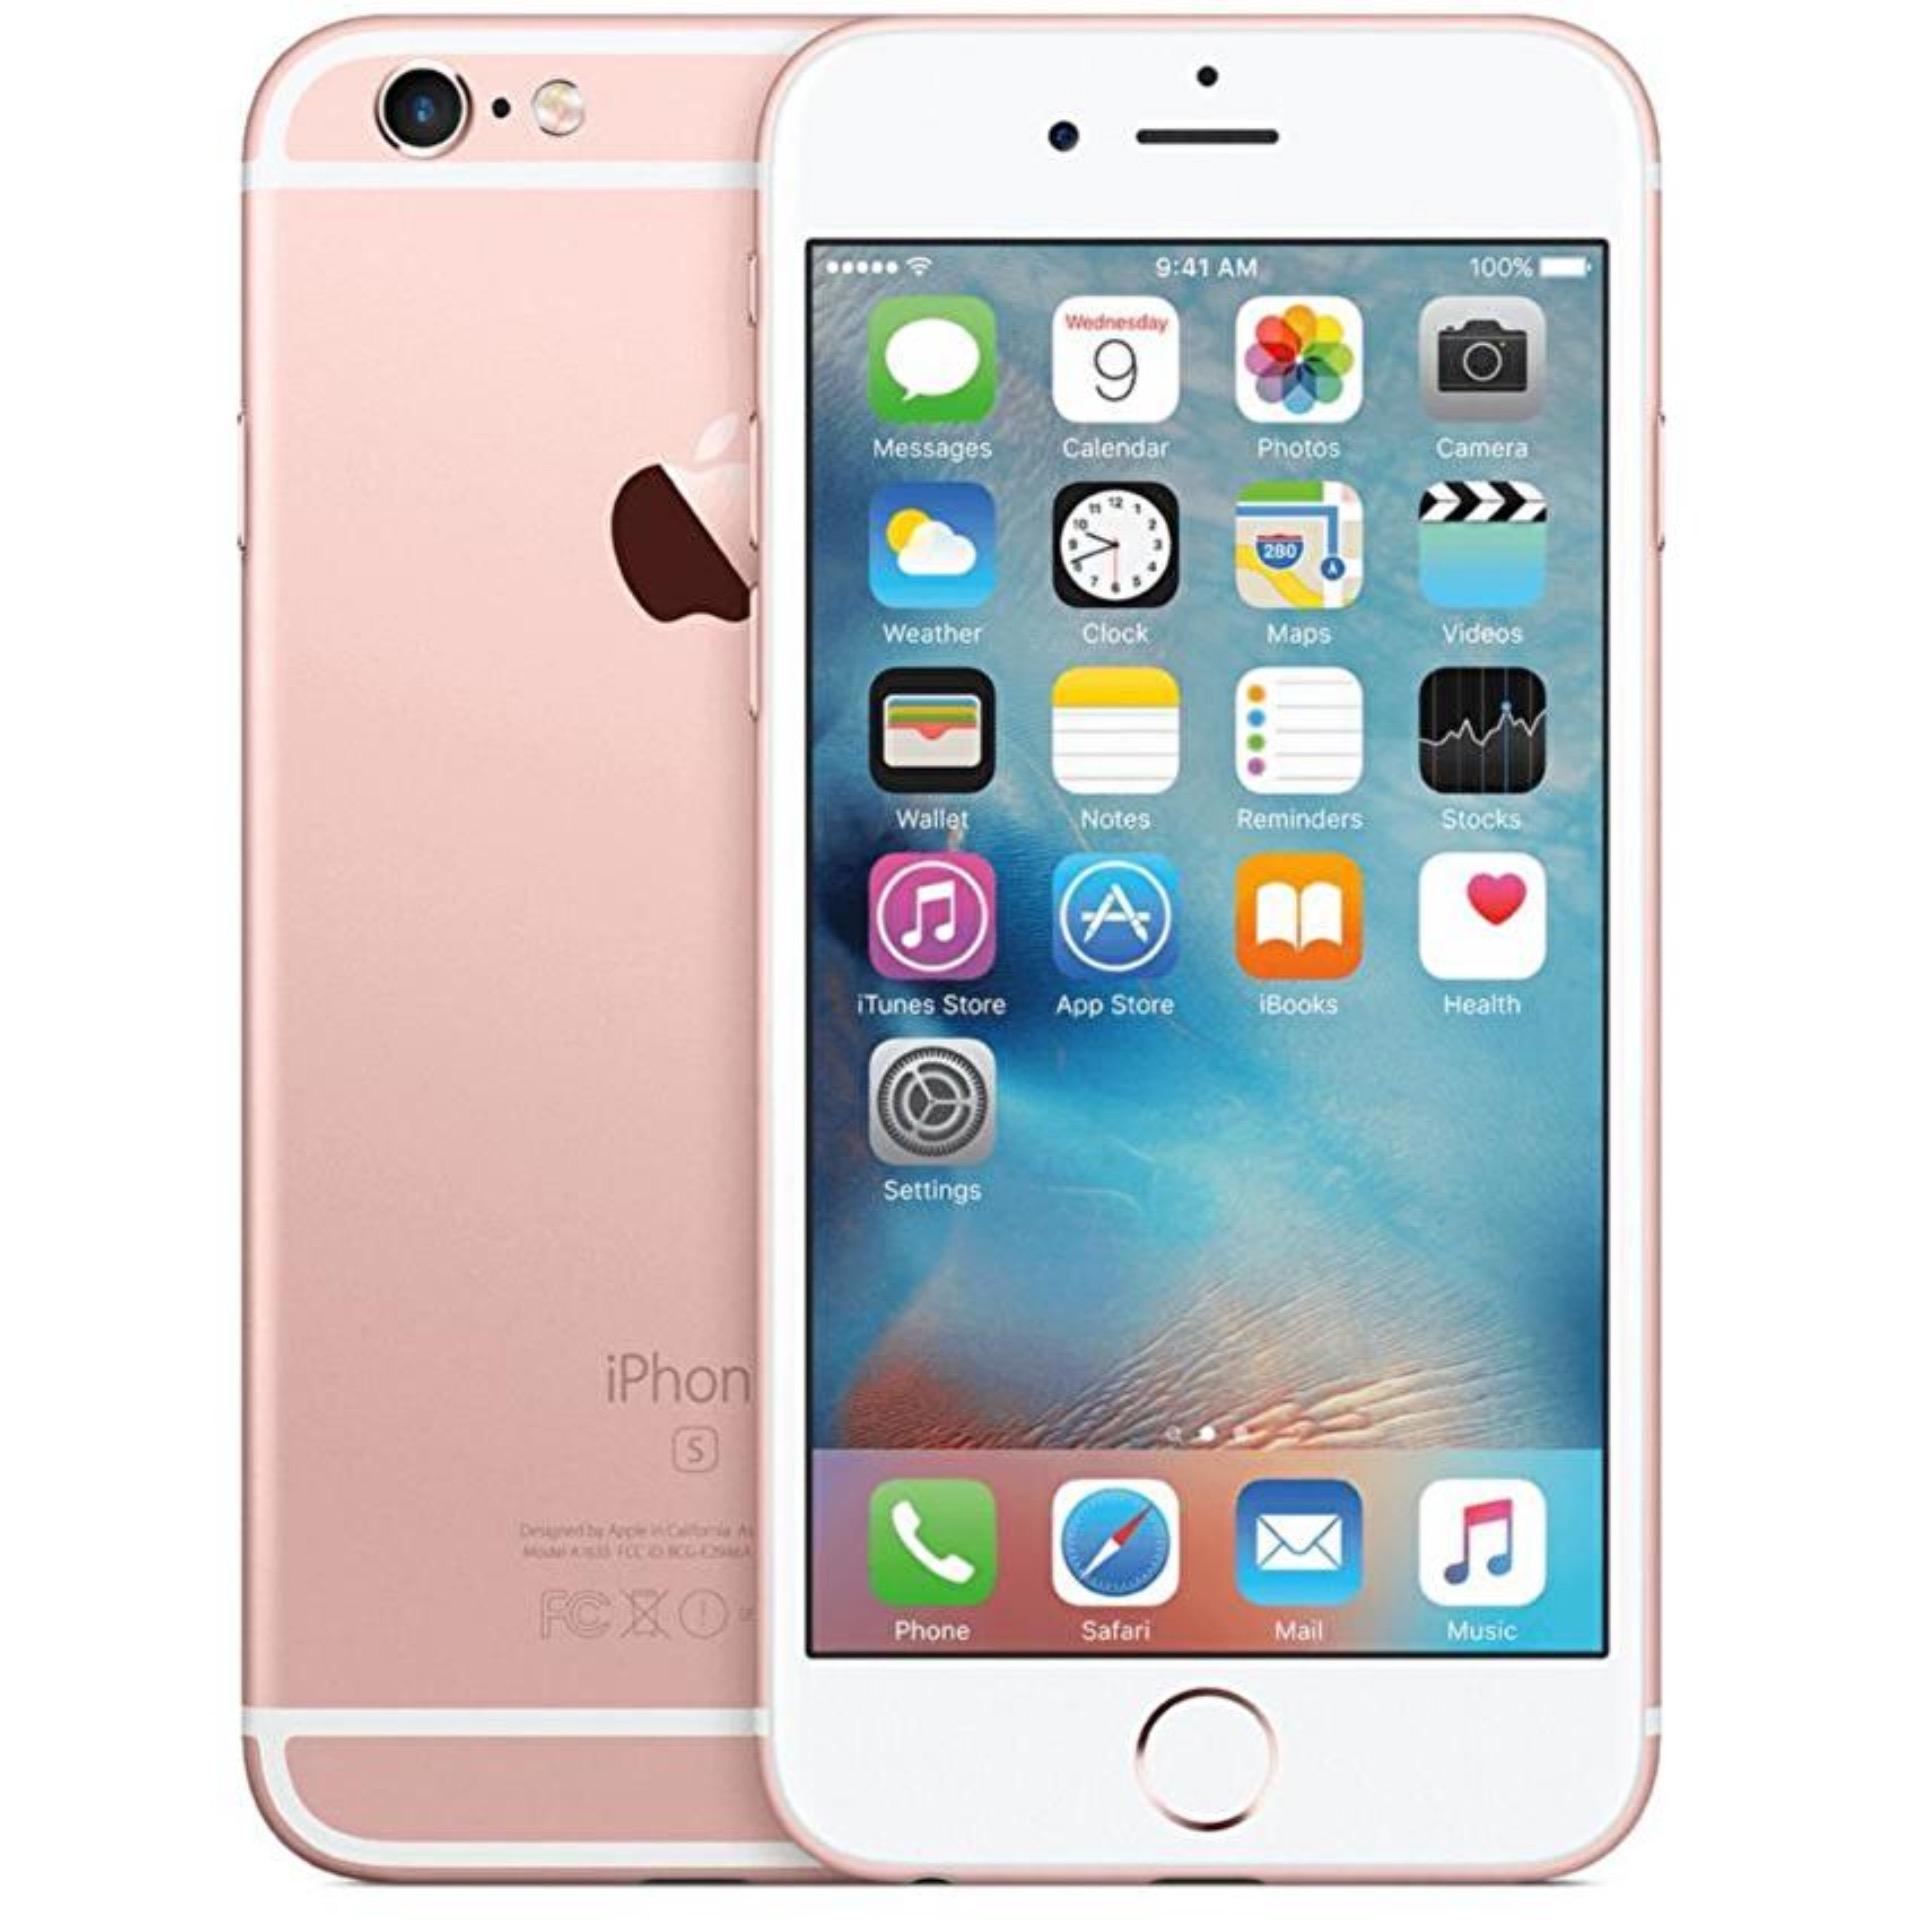 Iphone 6S - 16GB - Rose gold - New Garansi 1 tahun